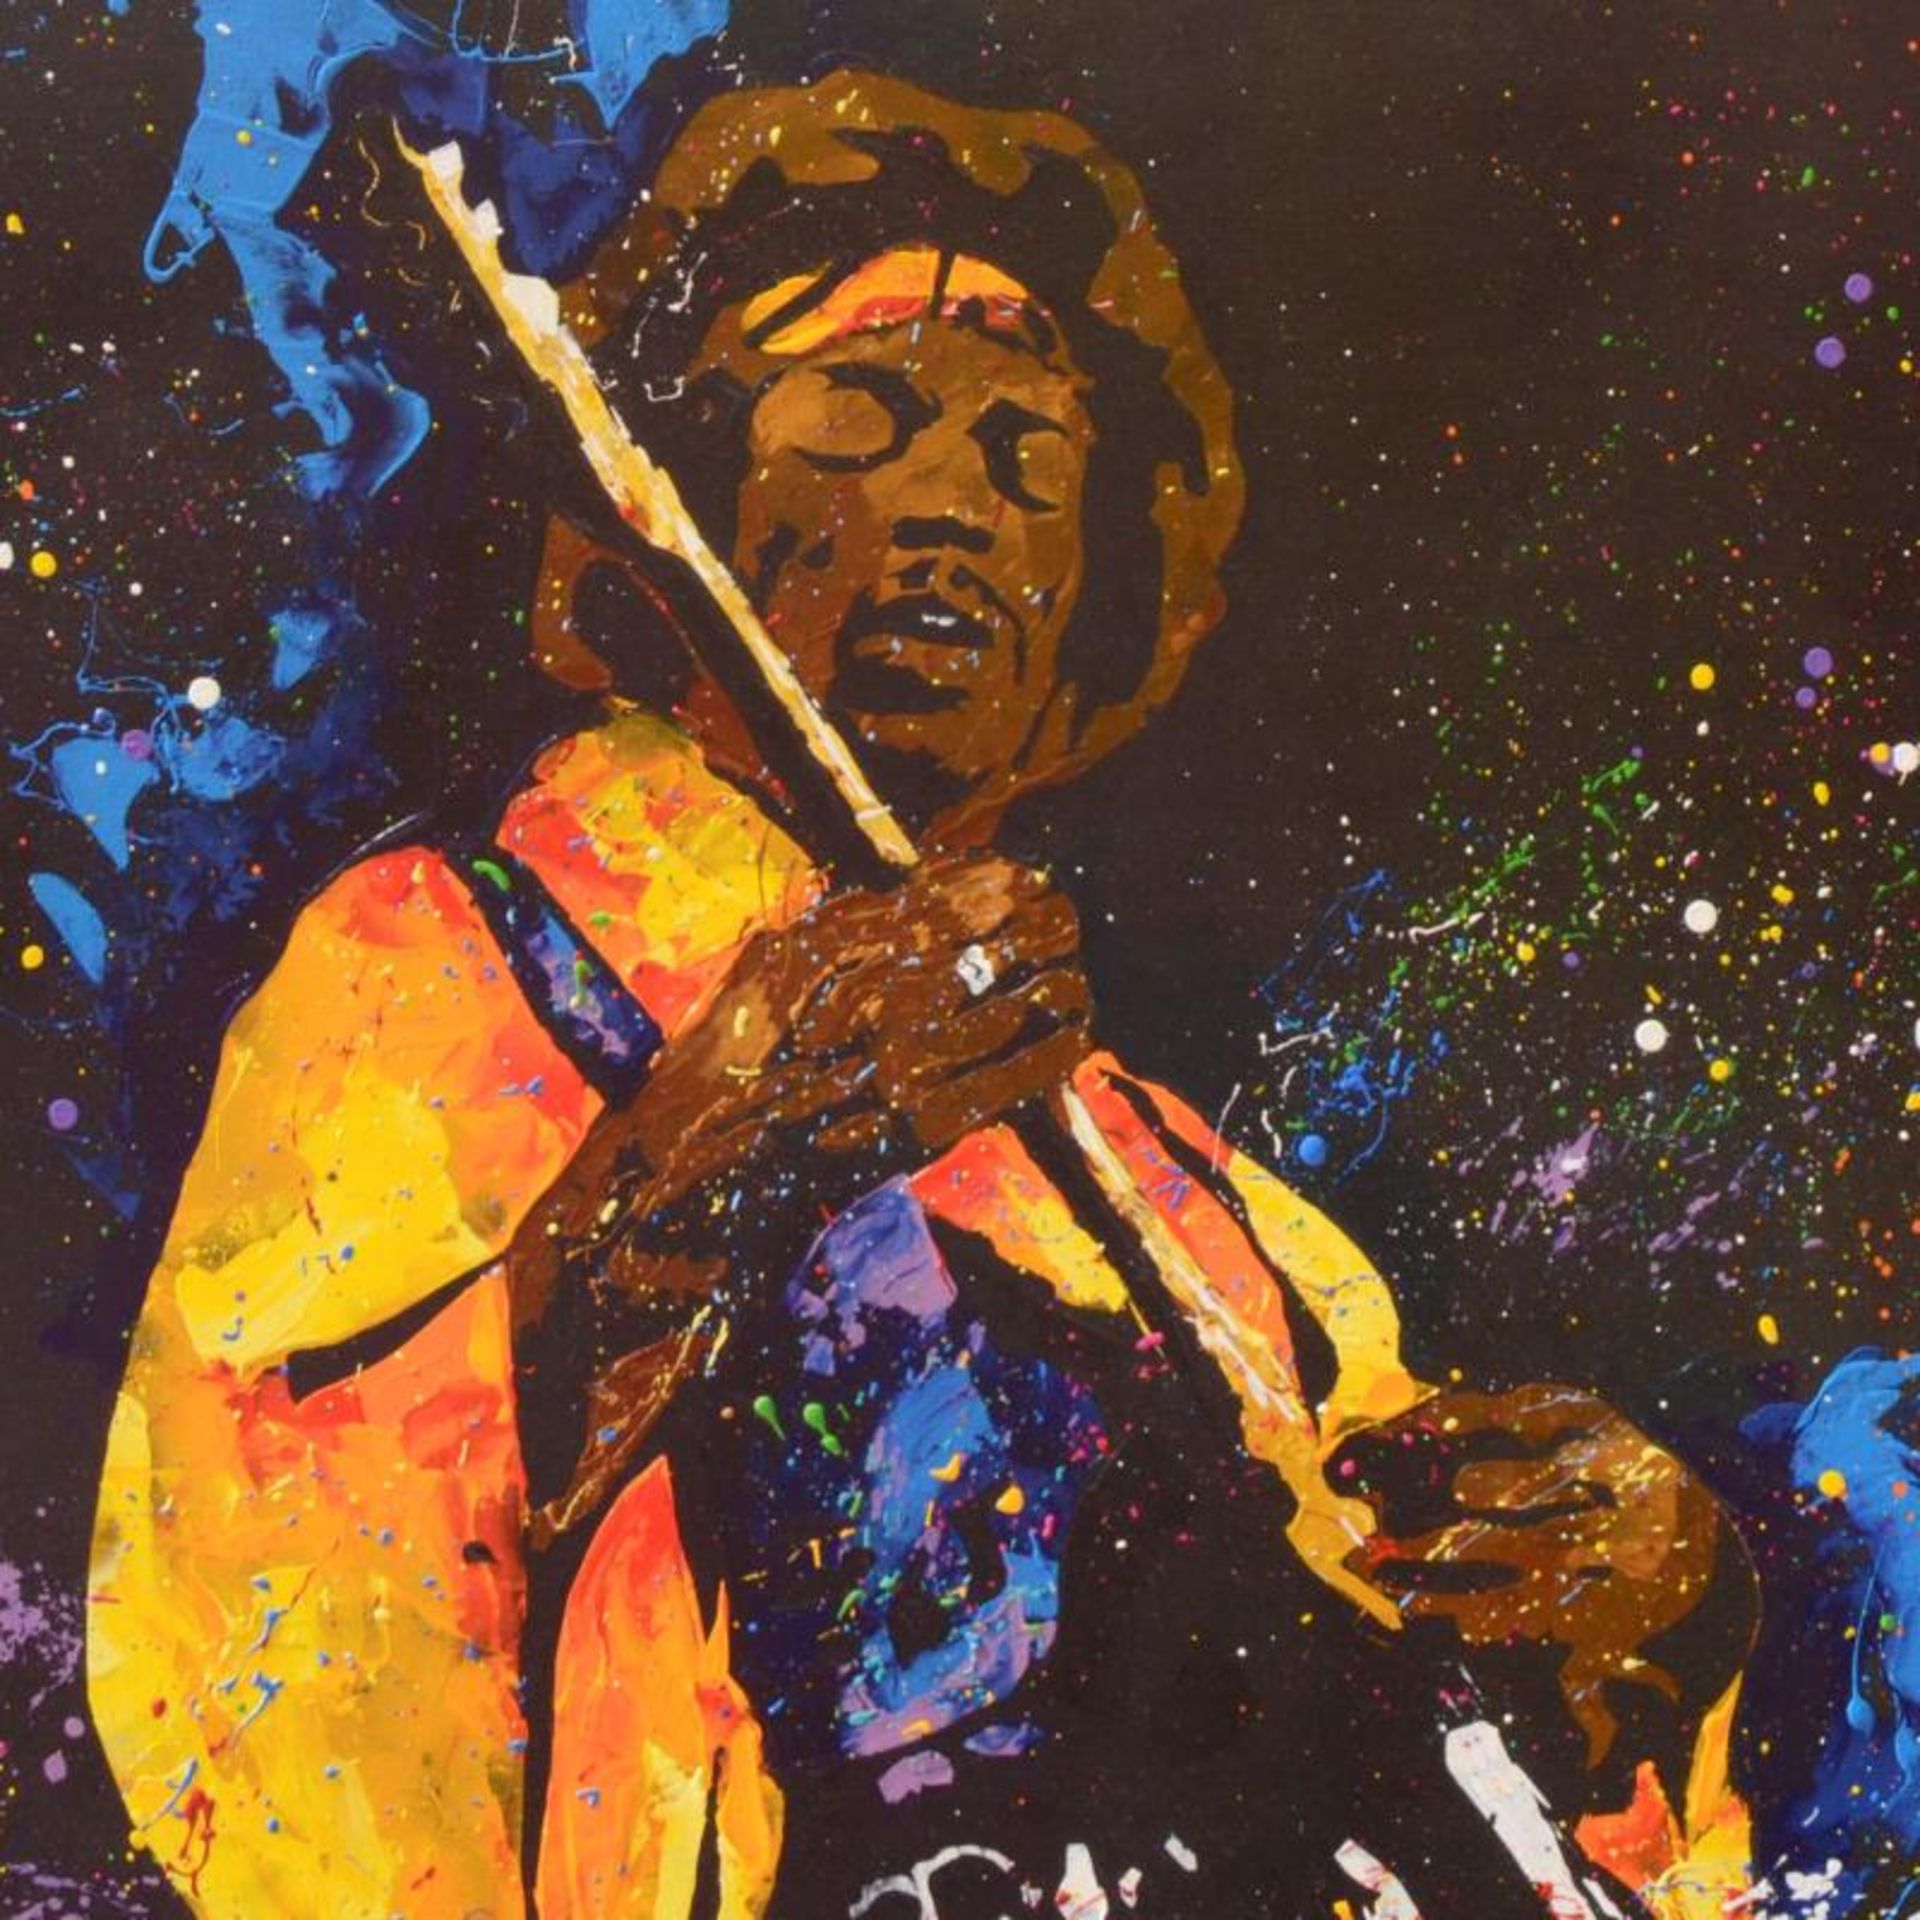 Hendrix by KAT - Image 2 of 2